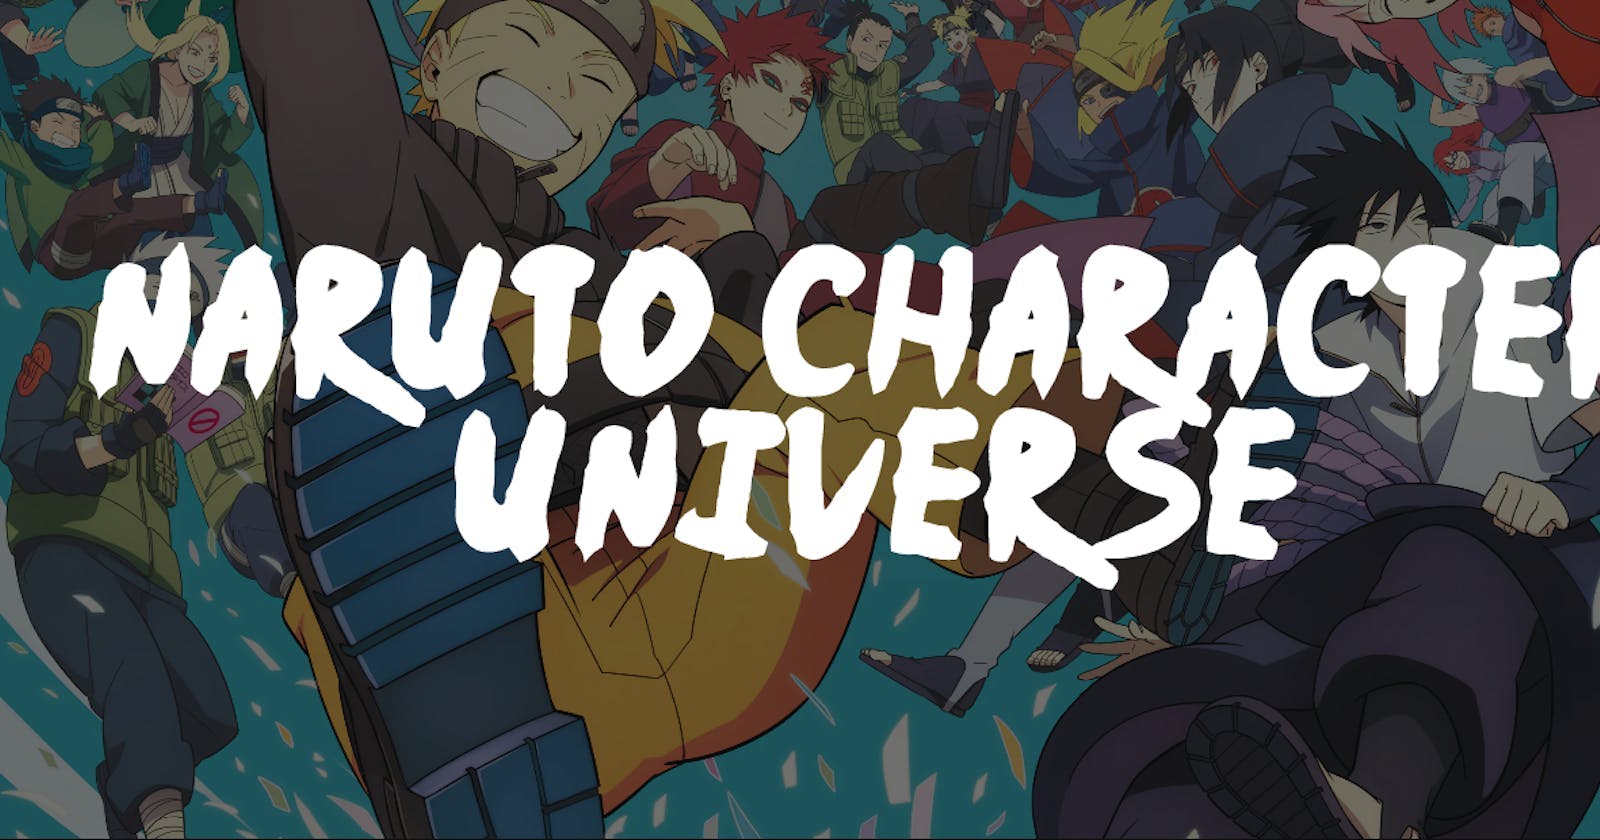 Introducing the Naruto DB: The most extensive public Naurto API for Naruto Universe